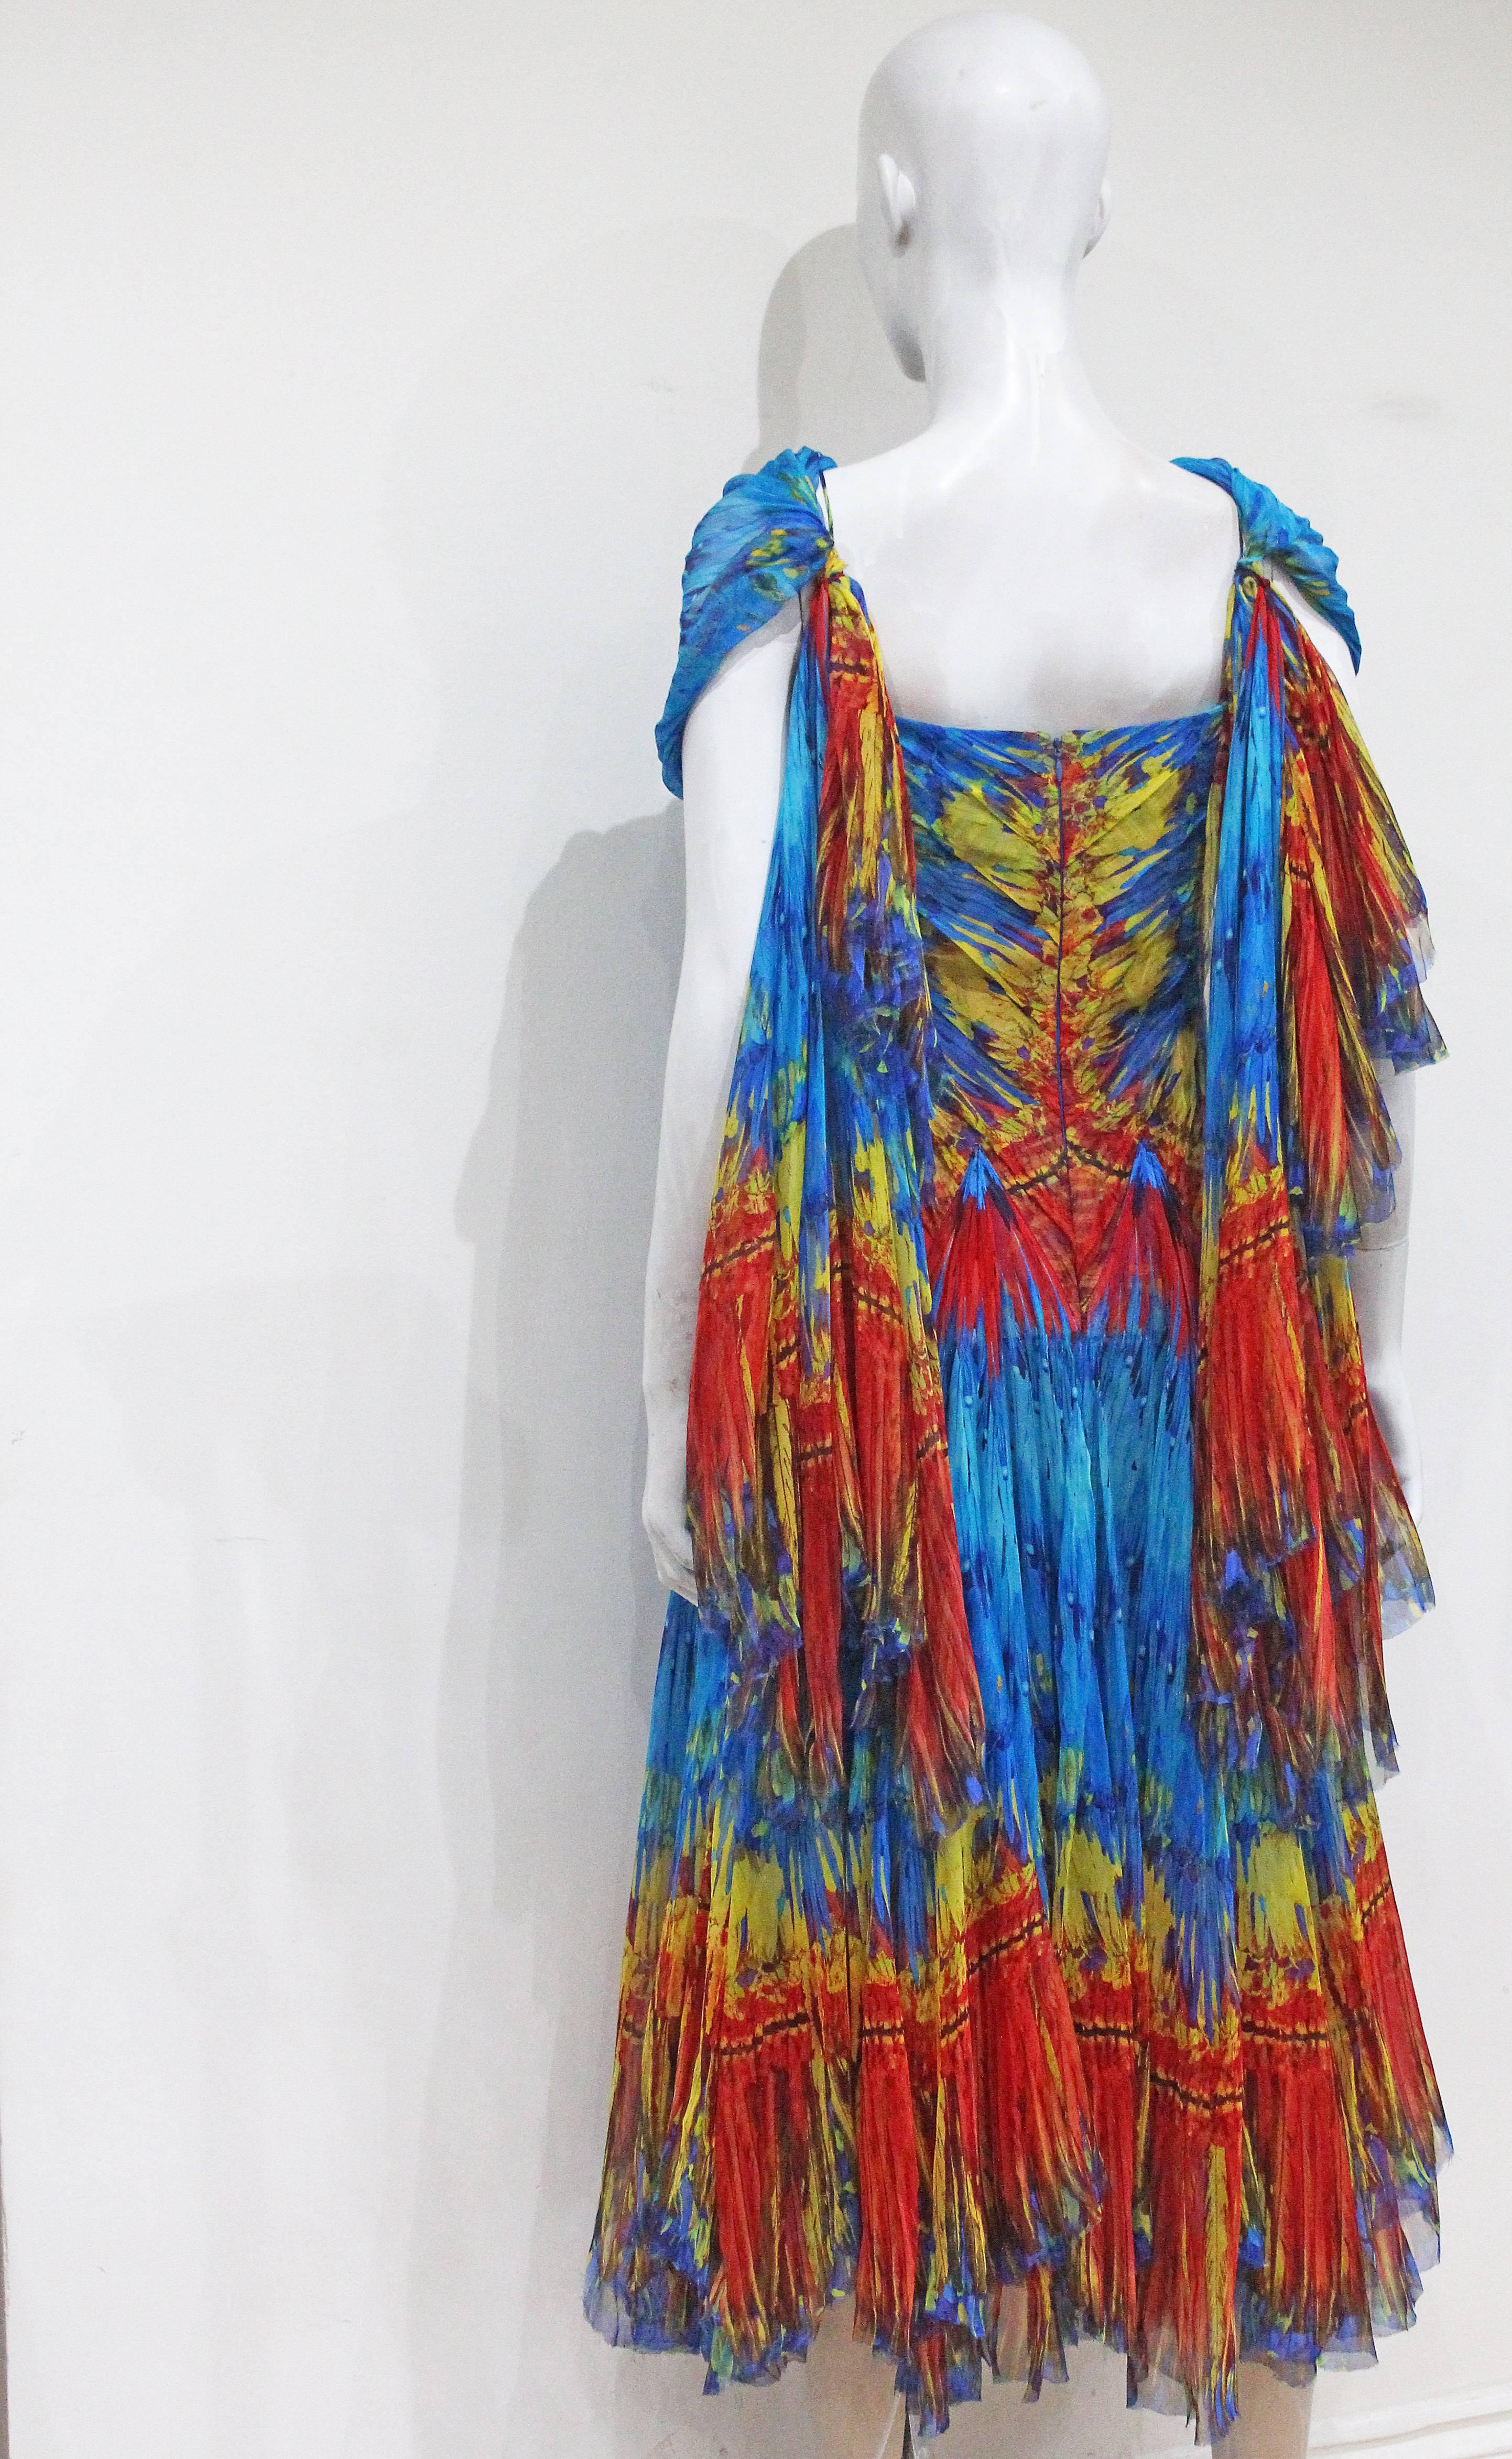 Blue Alexander McQueen 'Irere' tropical feather evening gown, c. 2003